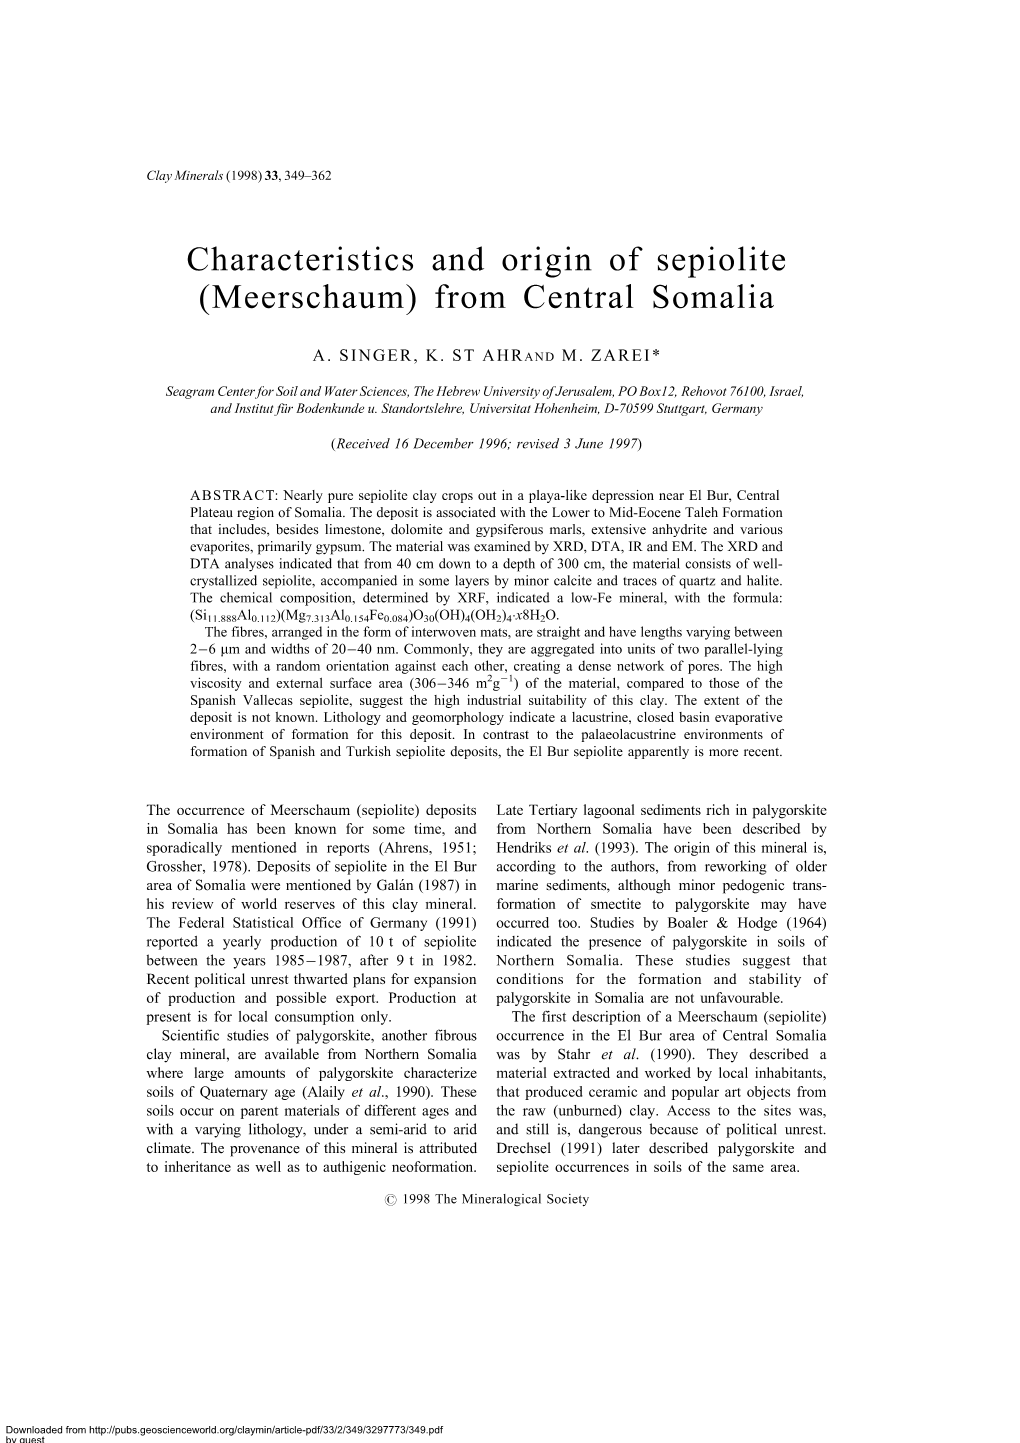 Characteristics and Origin of Sepiolite (Meerschaum) from Central Somalia